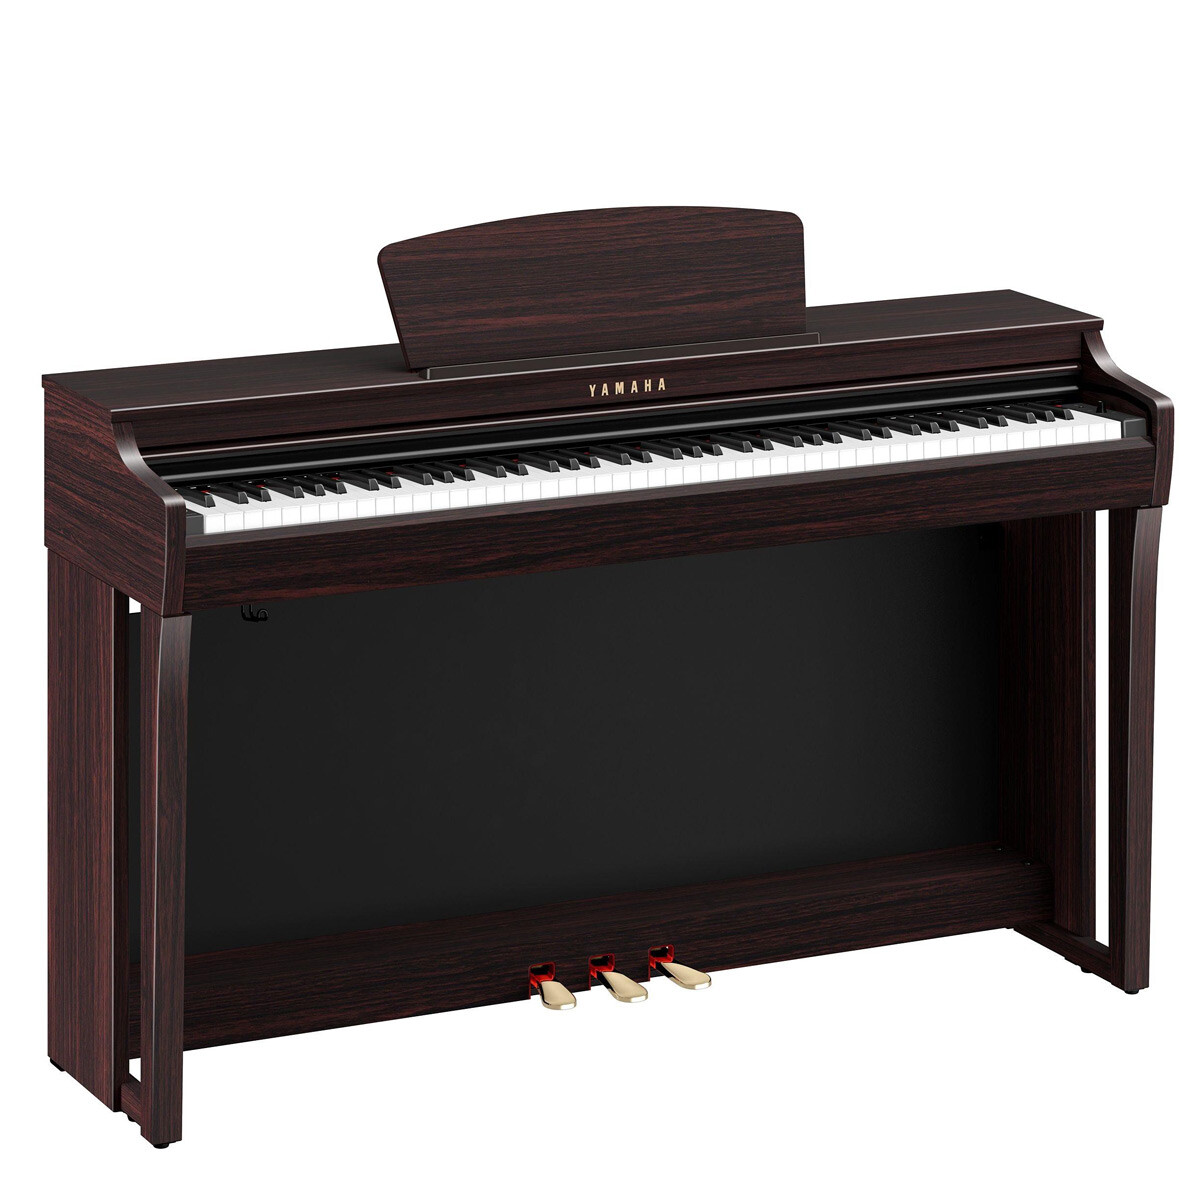 Piano Digital Yamaha Clavinova Clp725r 